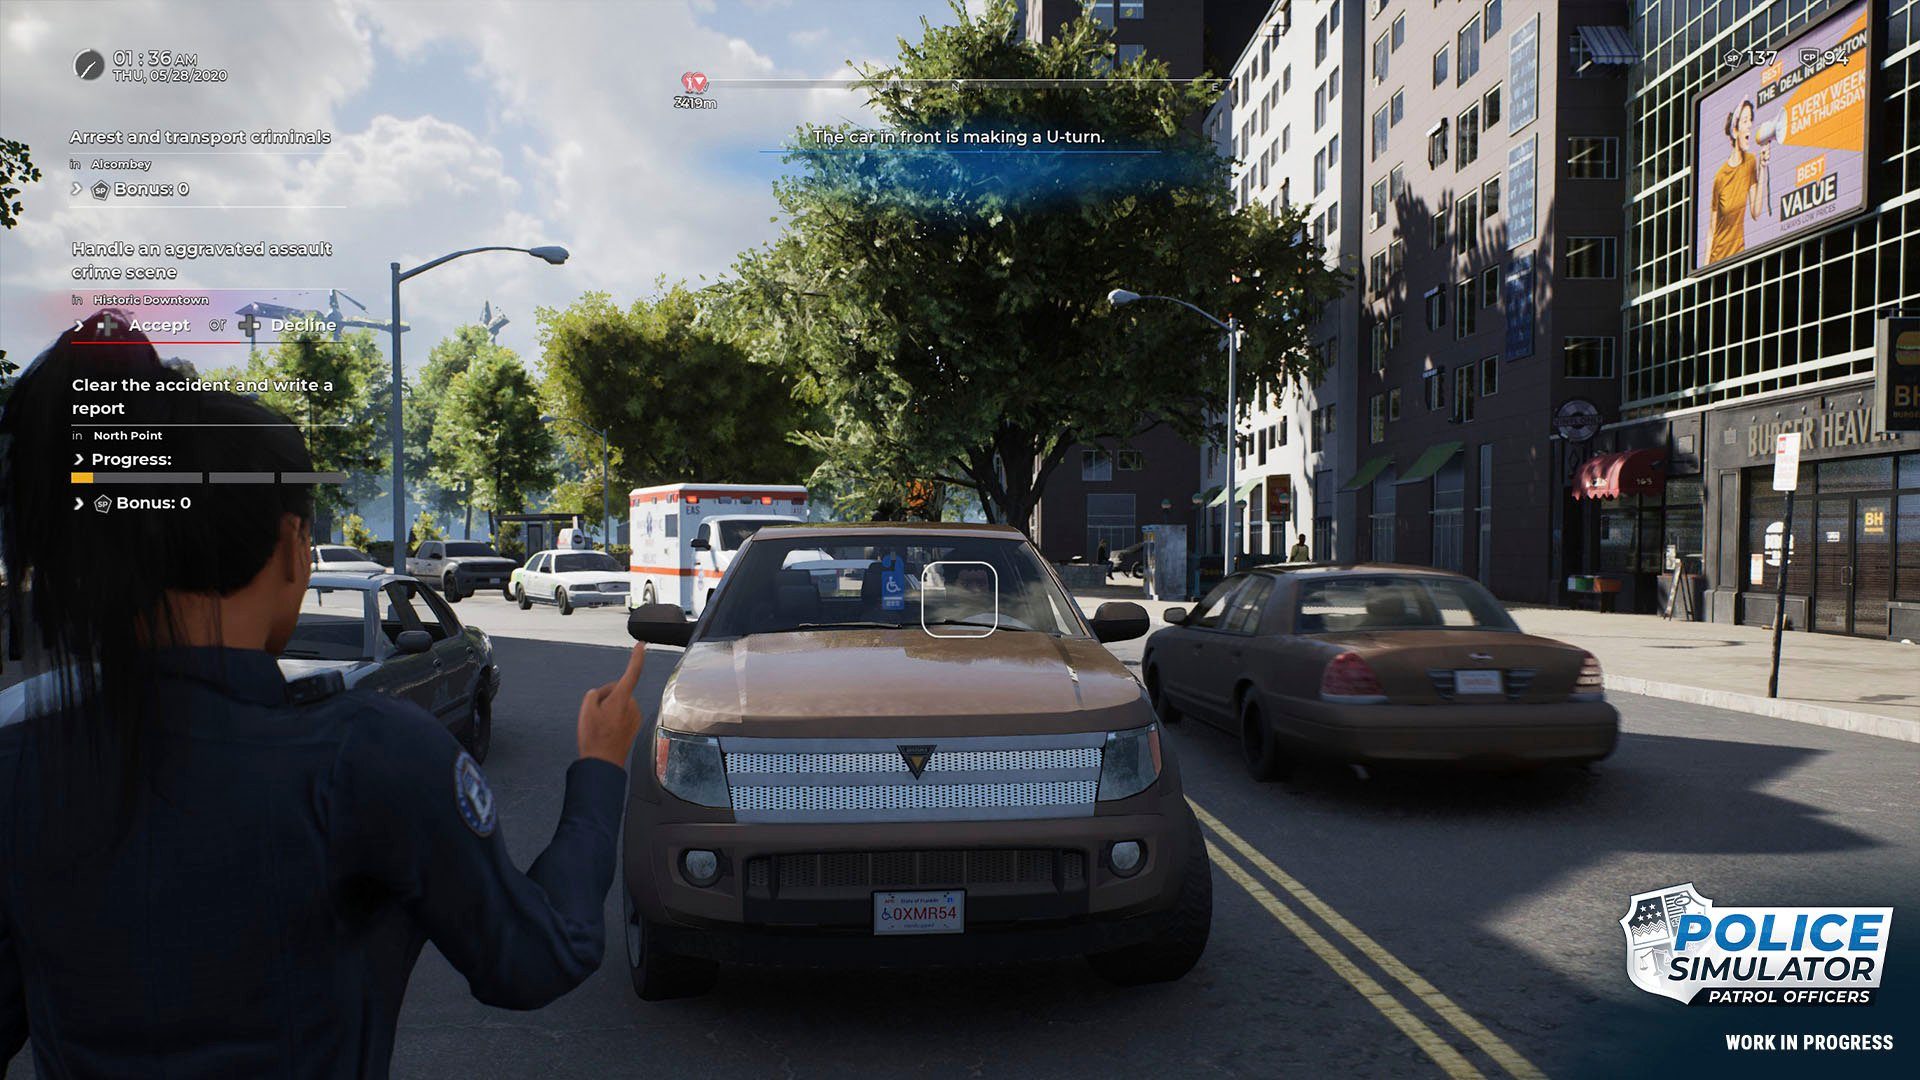 PlayStation 4 Simulator: Patrol Astragon Police Officers